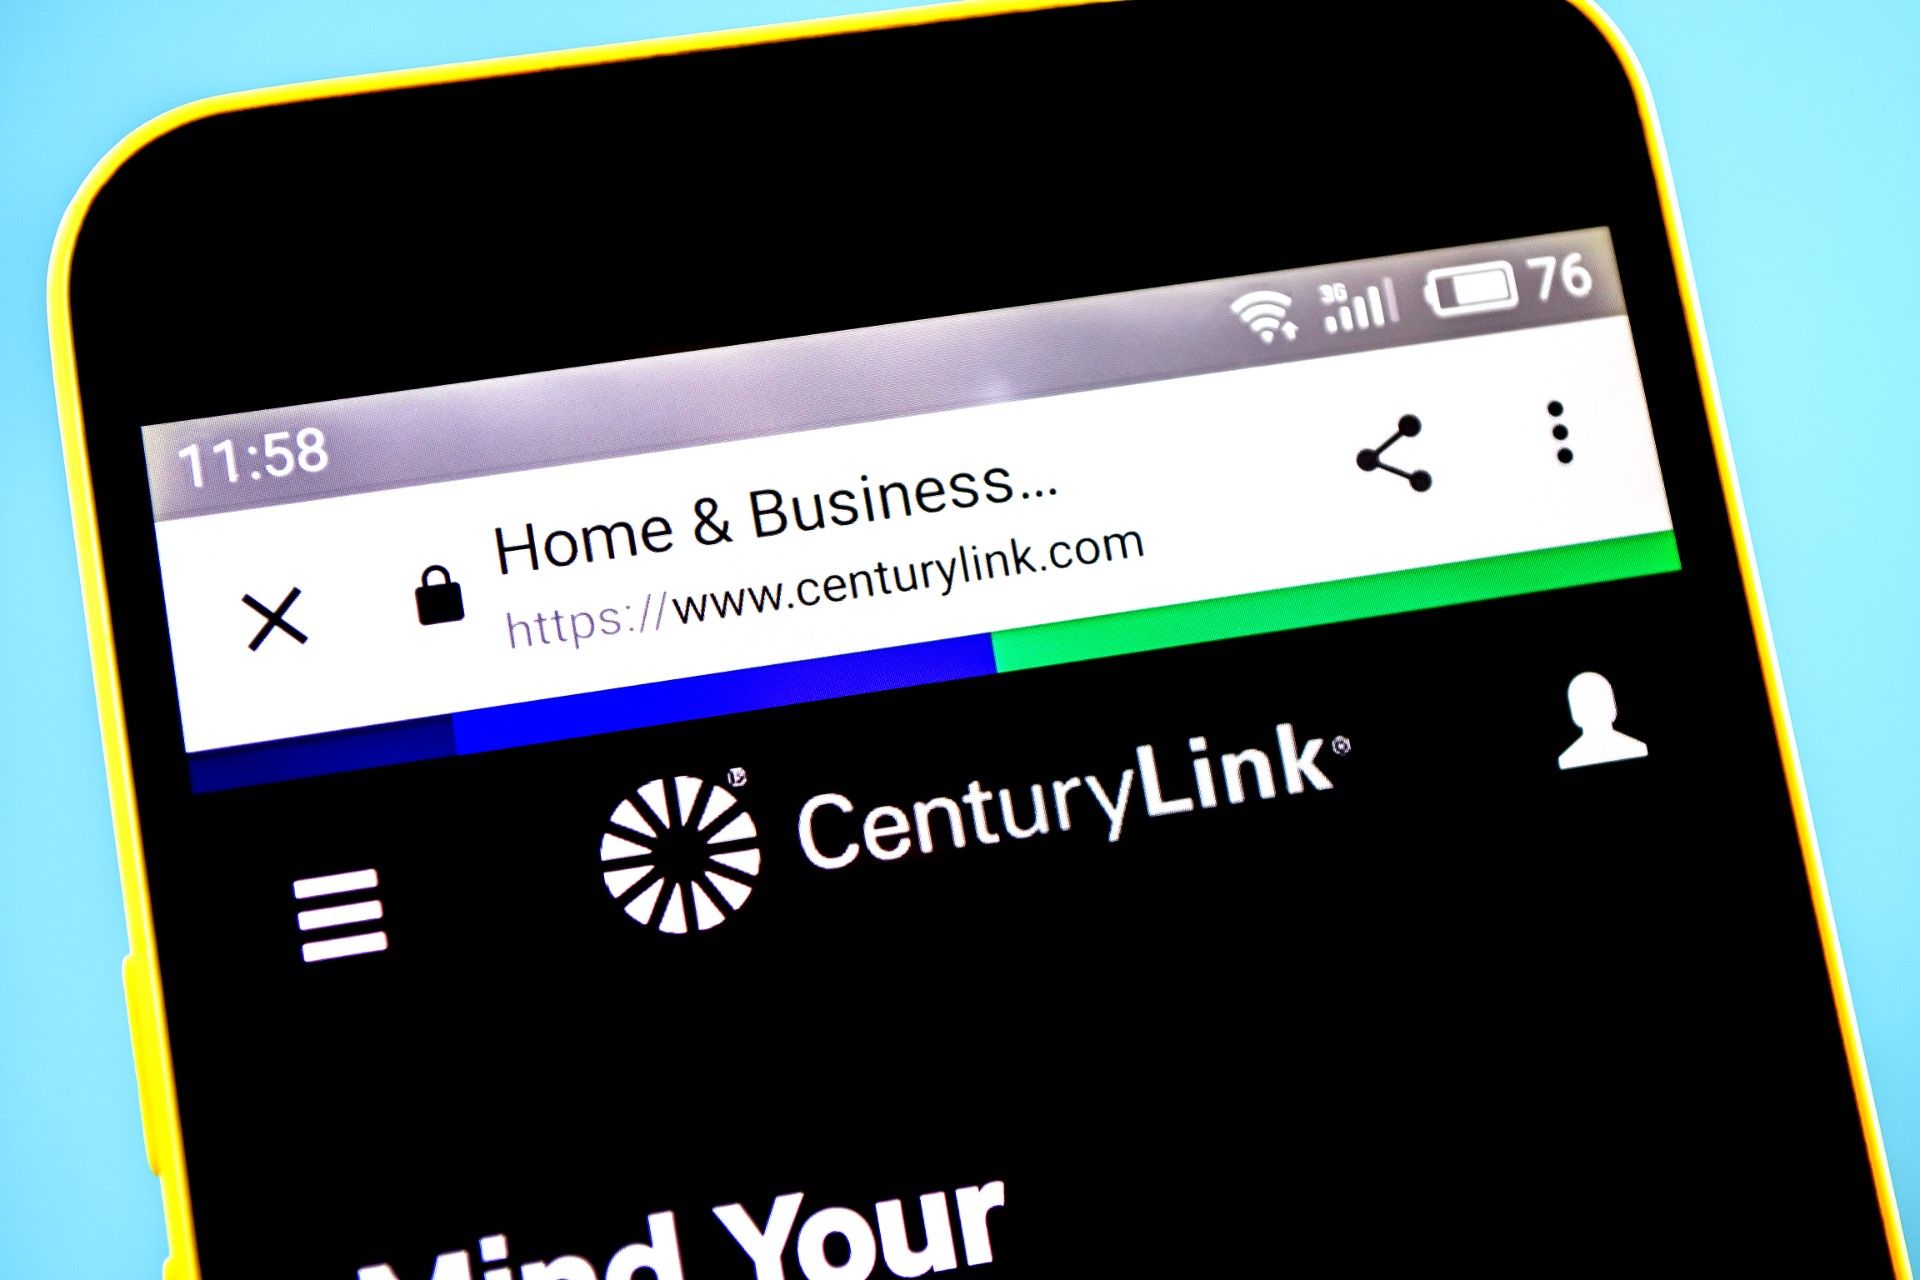 Smartphone displays the CenturyLink mobile site